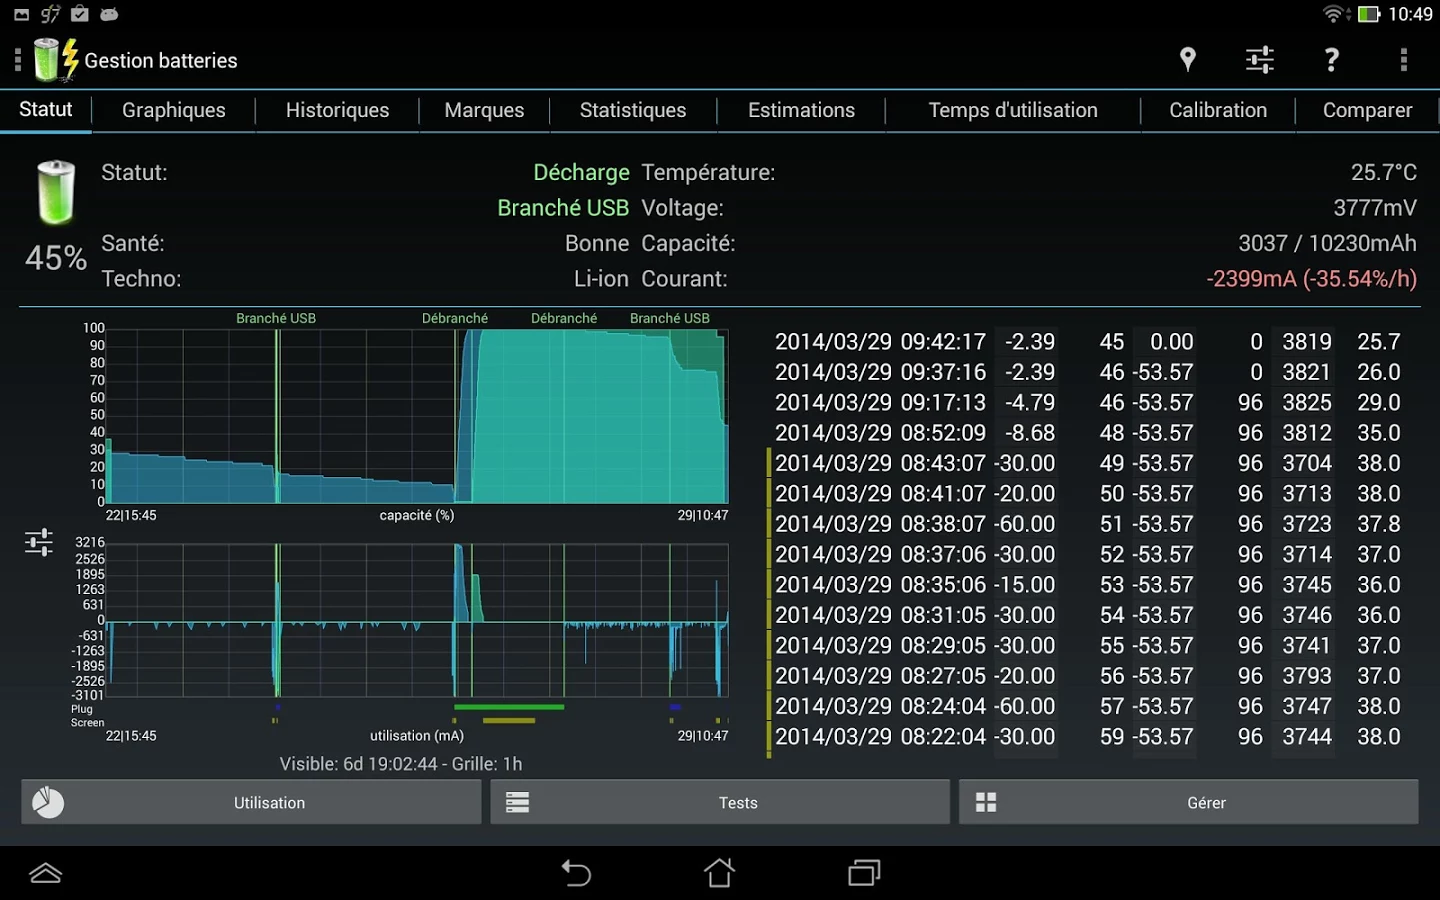 Battery Monitor Widget Pro - screenshot